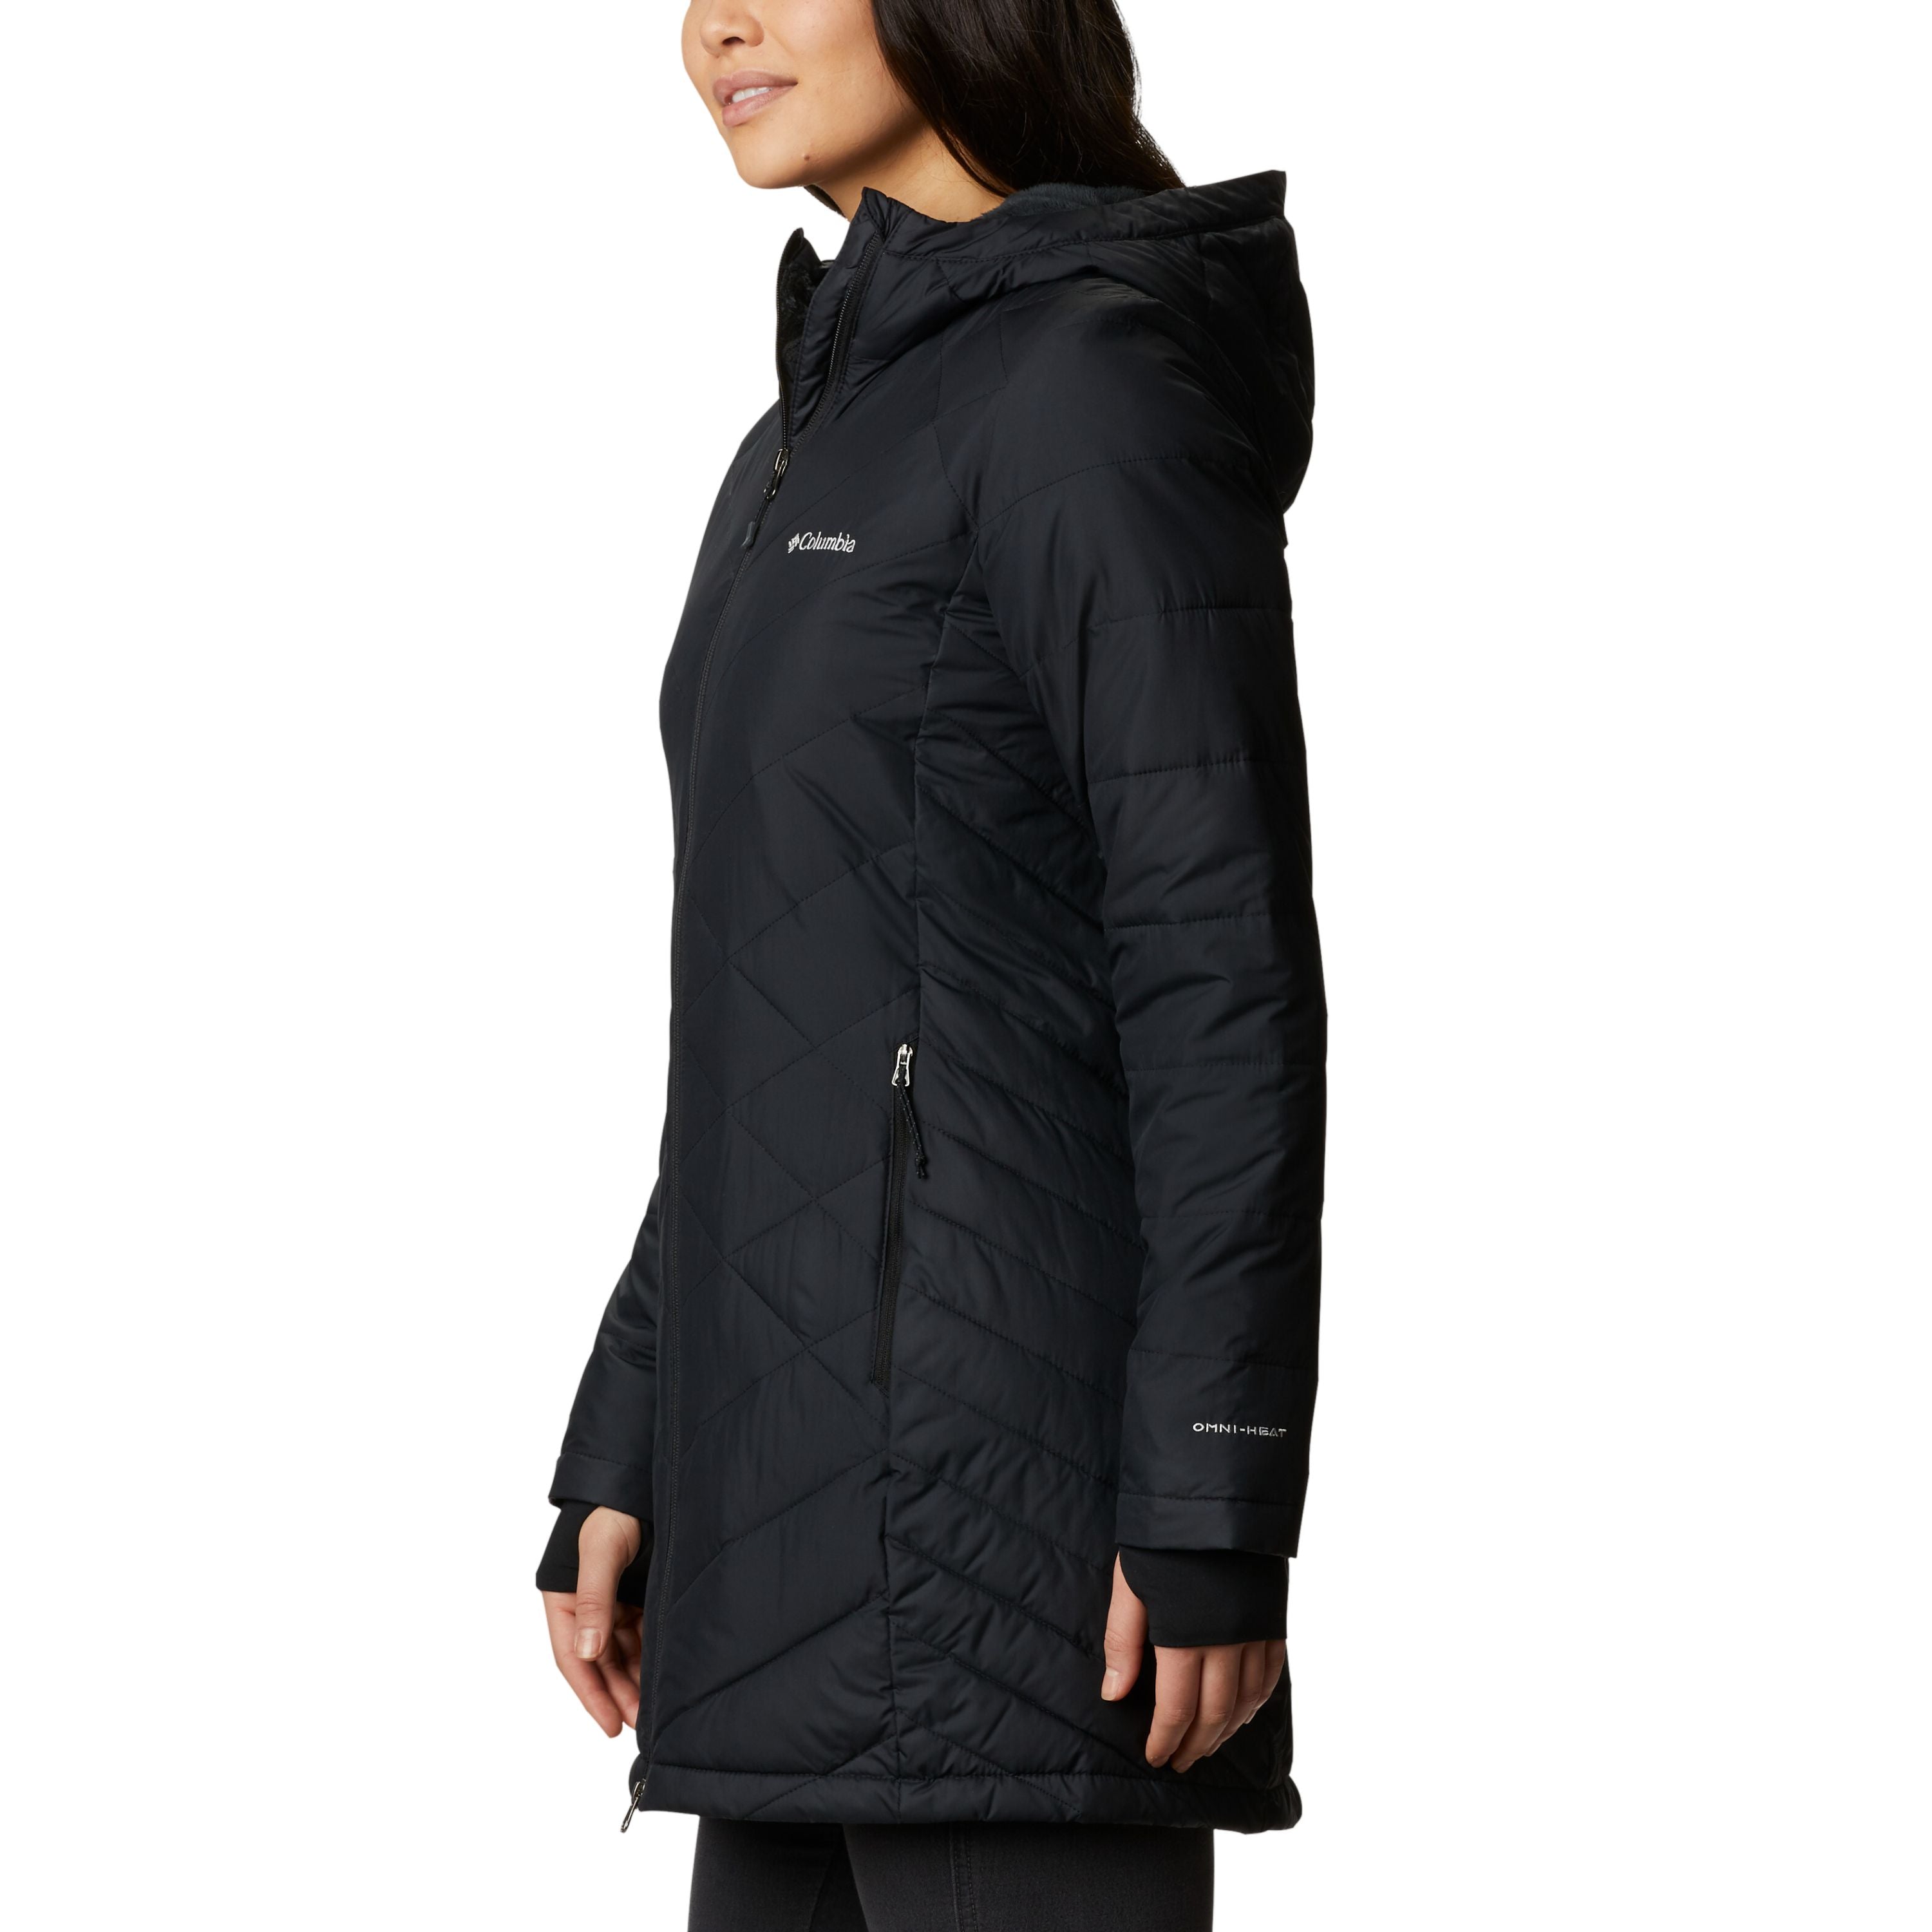 Manteau long avec capuchon "Heavenly" - Femme||"Heavenly" Long hooded jacket - Women's